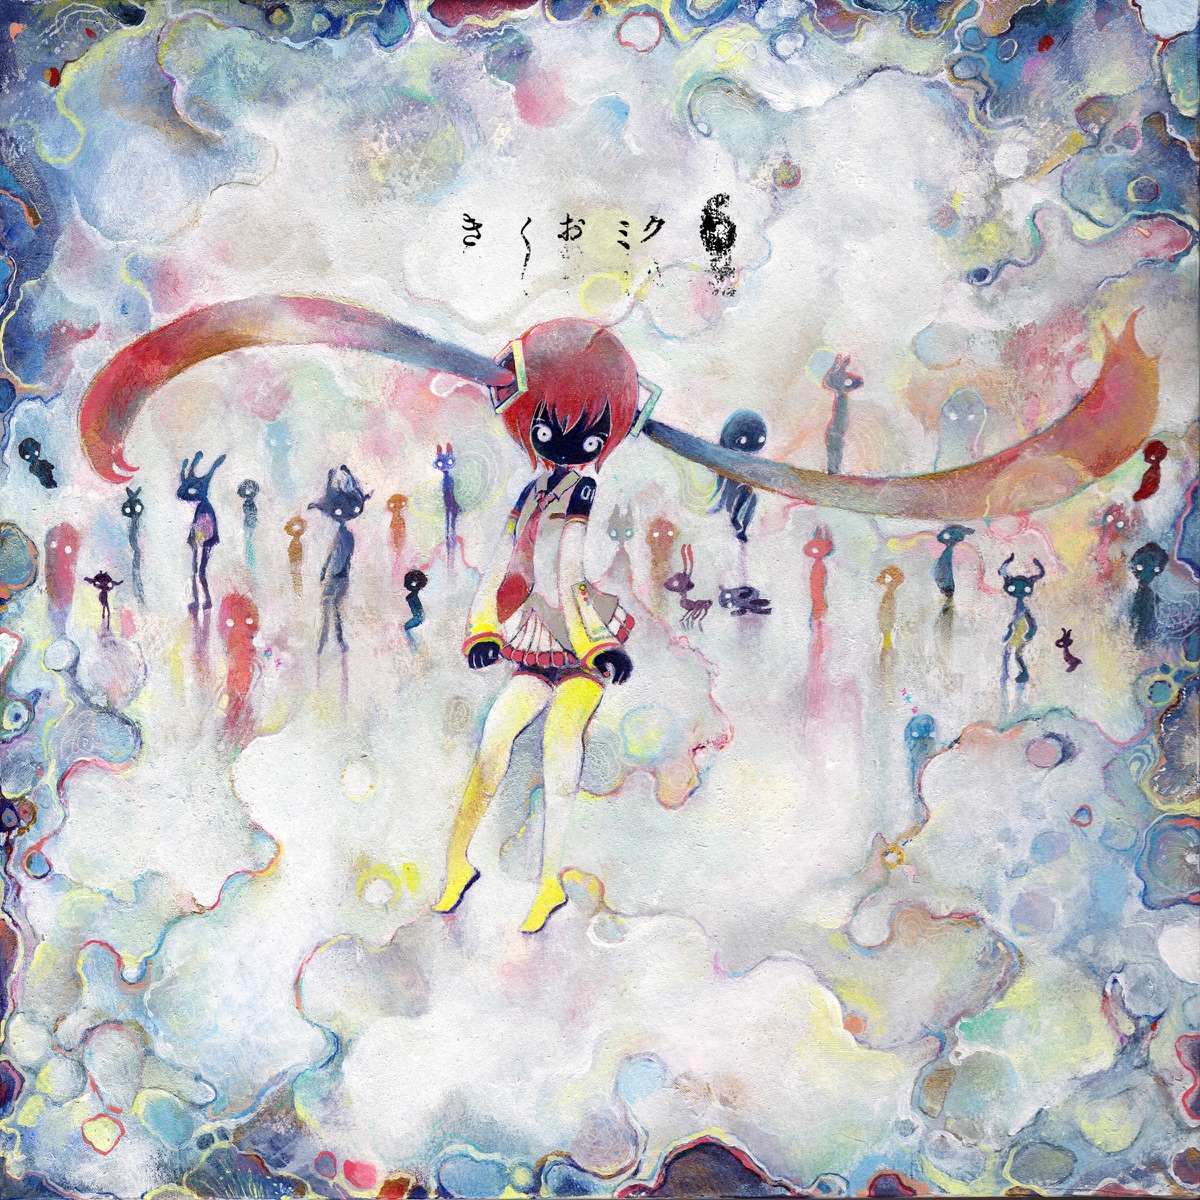 Cover art for『Kikuo - 愛を探して』from the release『Kikuo Miku 6